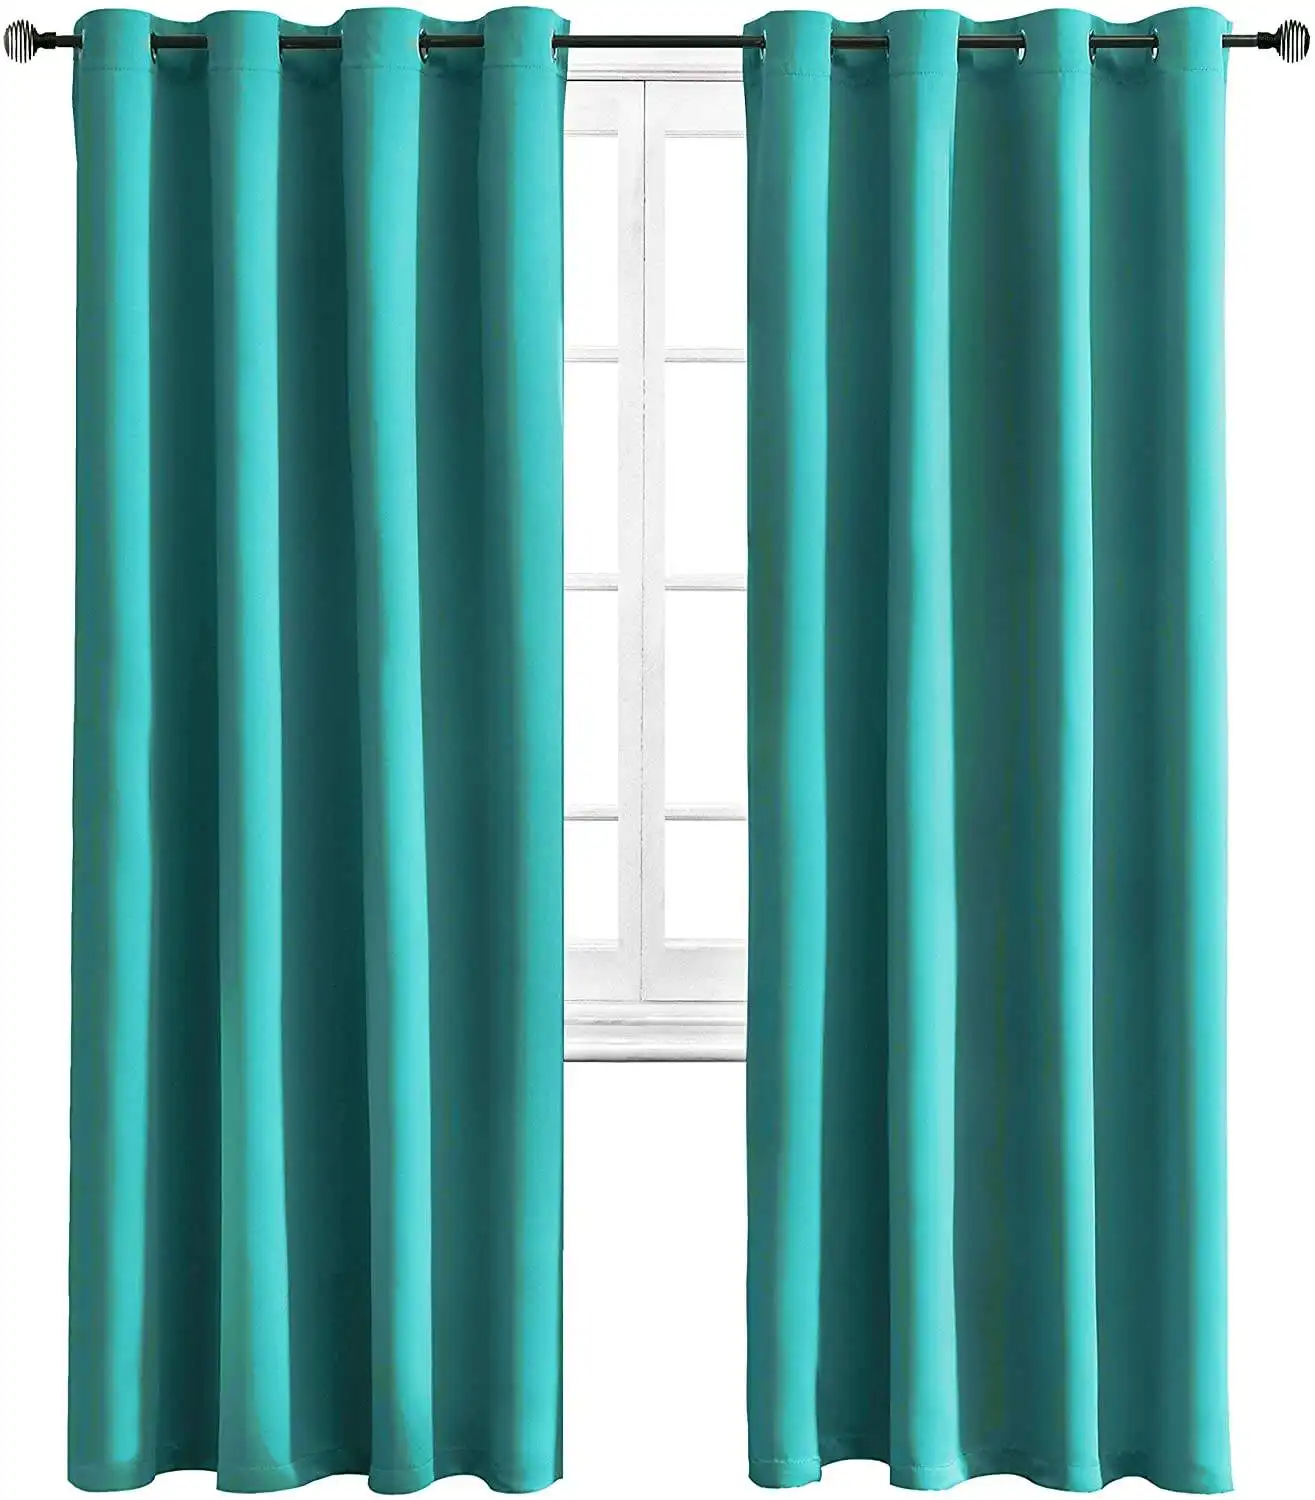 Tirai Blackout 100% Dekorasi Rumah Tirai Linen Imitasi Tirai Jendela Mewah untuk Ruang Tamu